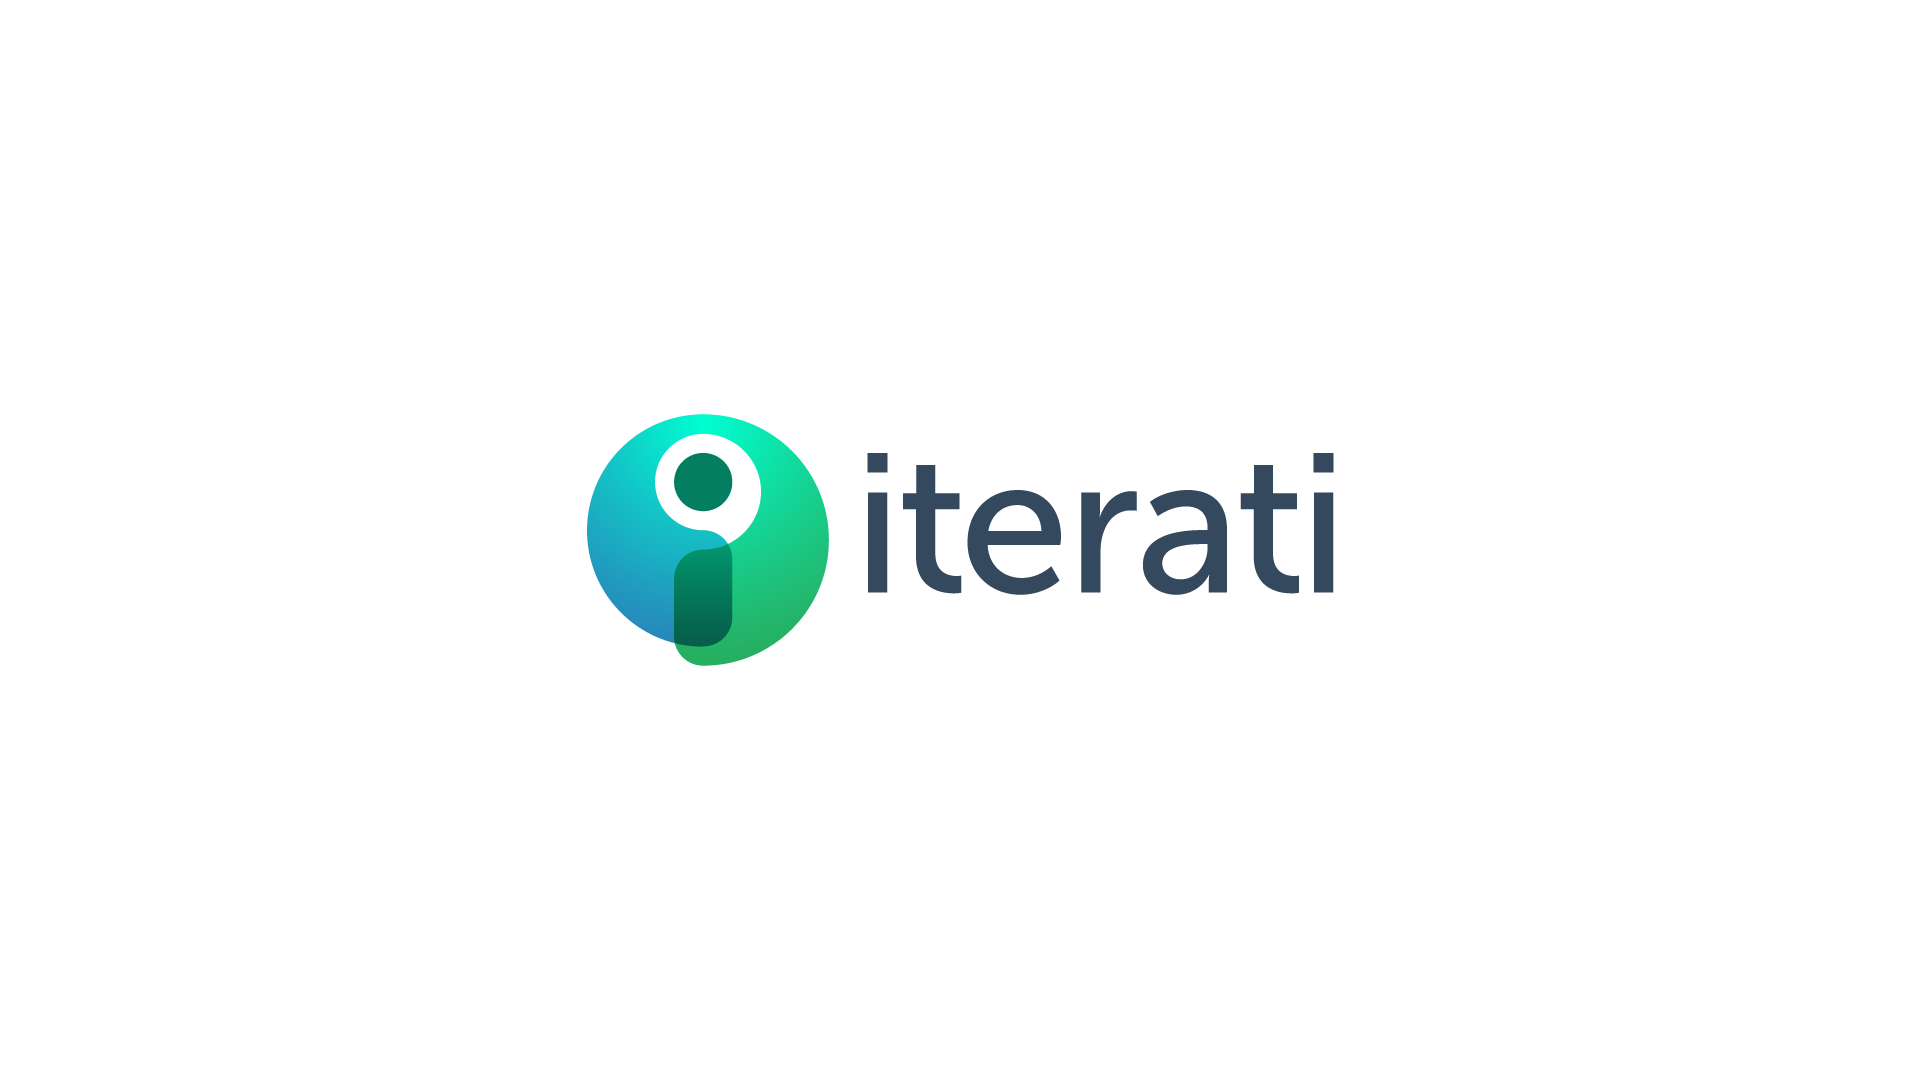 Iterati - Product Design Studio logo, abstract 'i' design, symbolizing innovation and creativity in product design